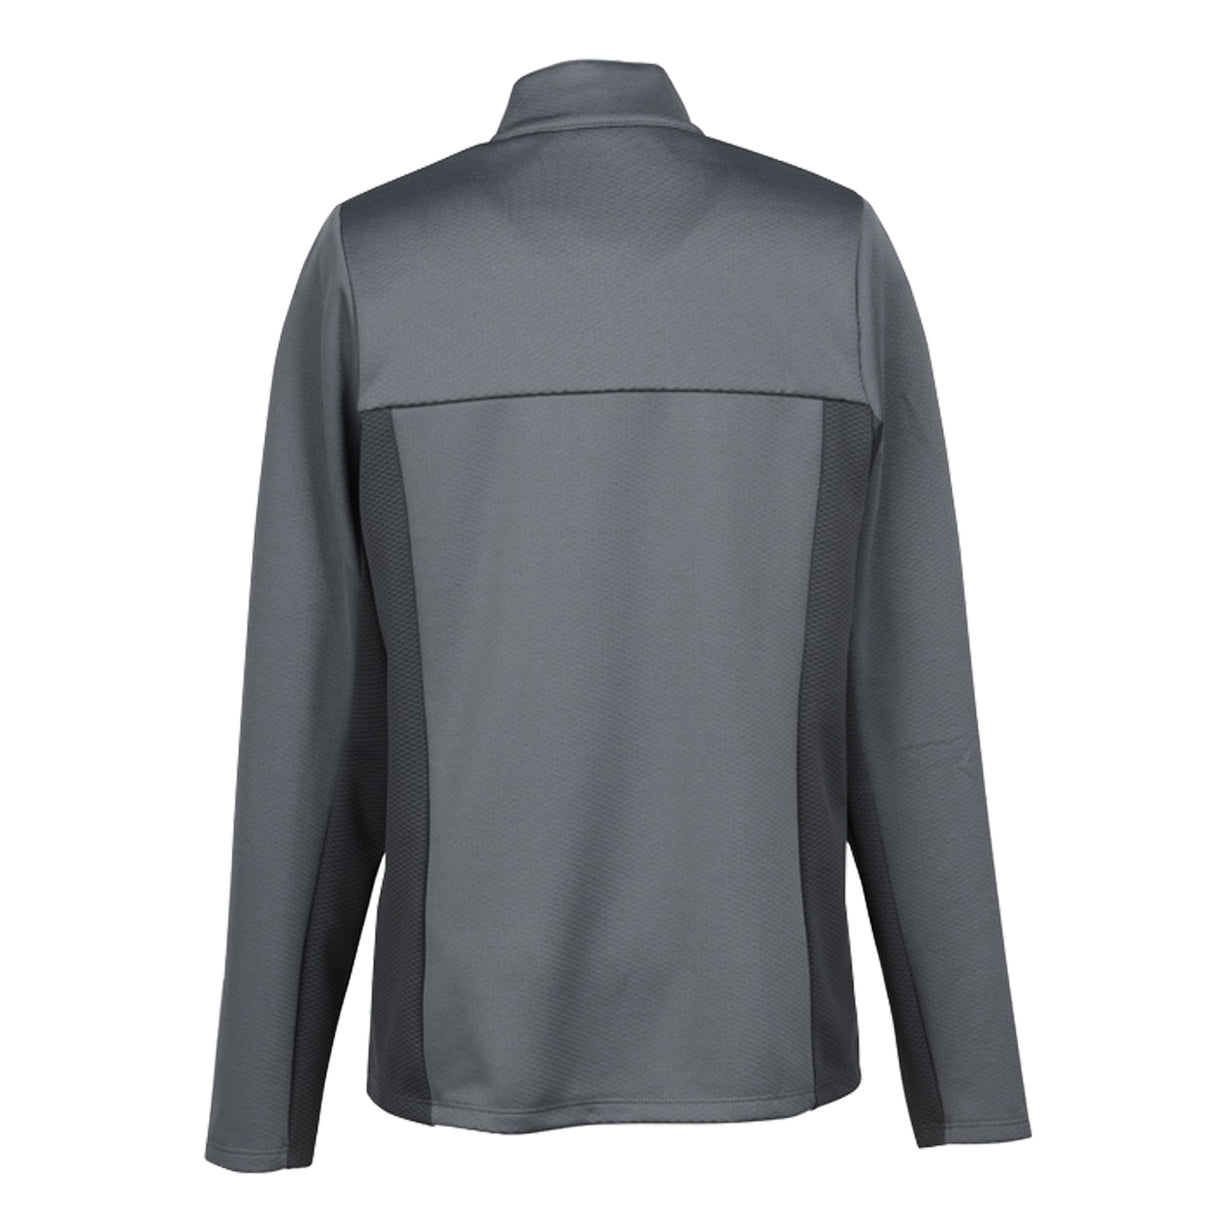 Antigua Passage Full-Zip Long-Sleeve Golf Jacket